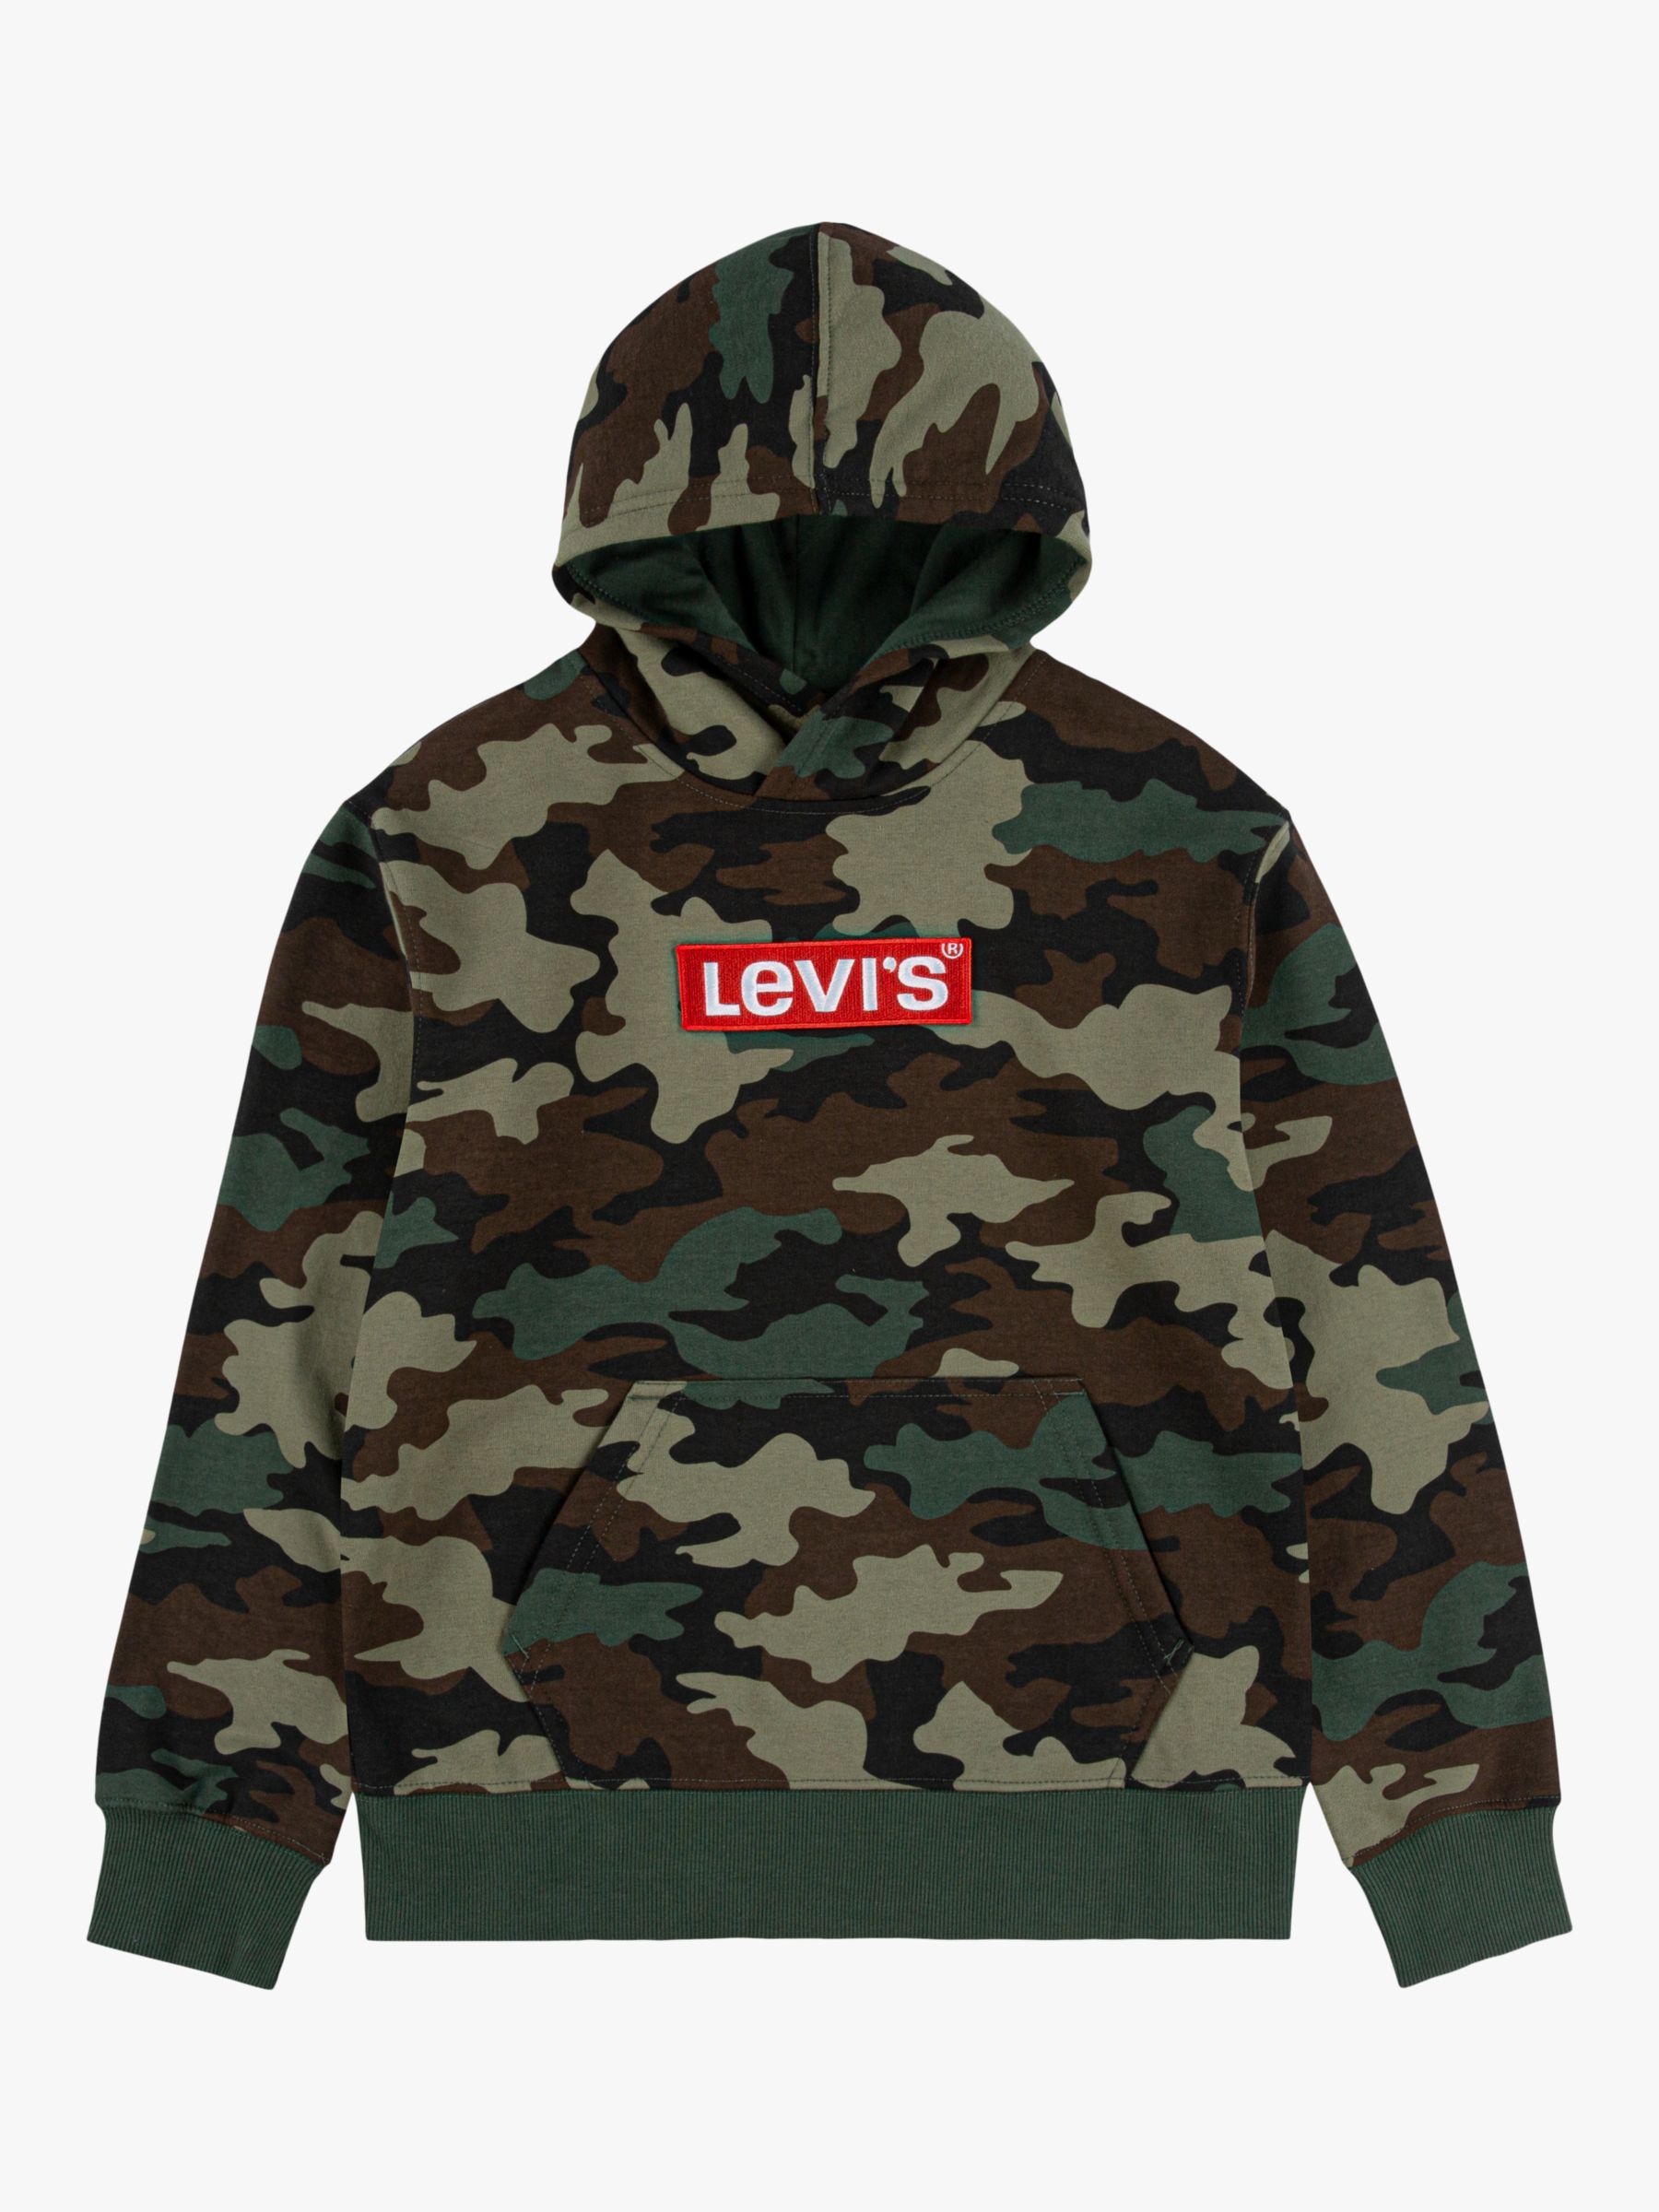 Levi's Kids' Camouflage Hoodie, Khaki